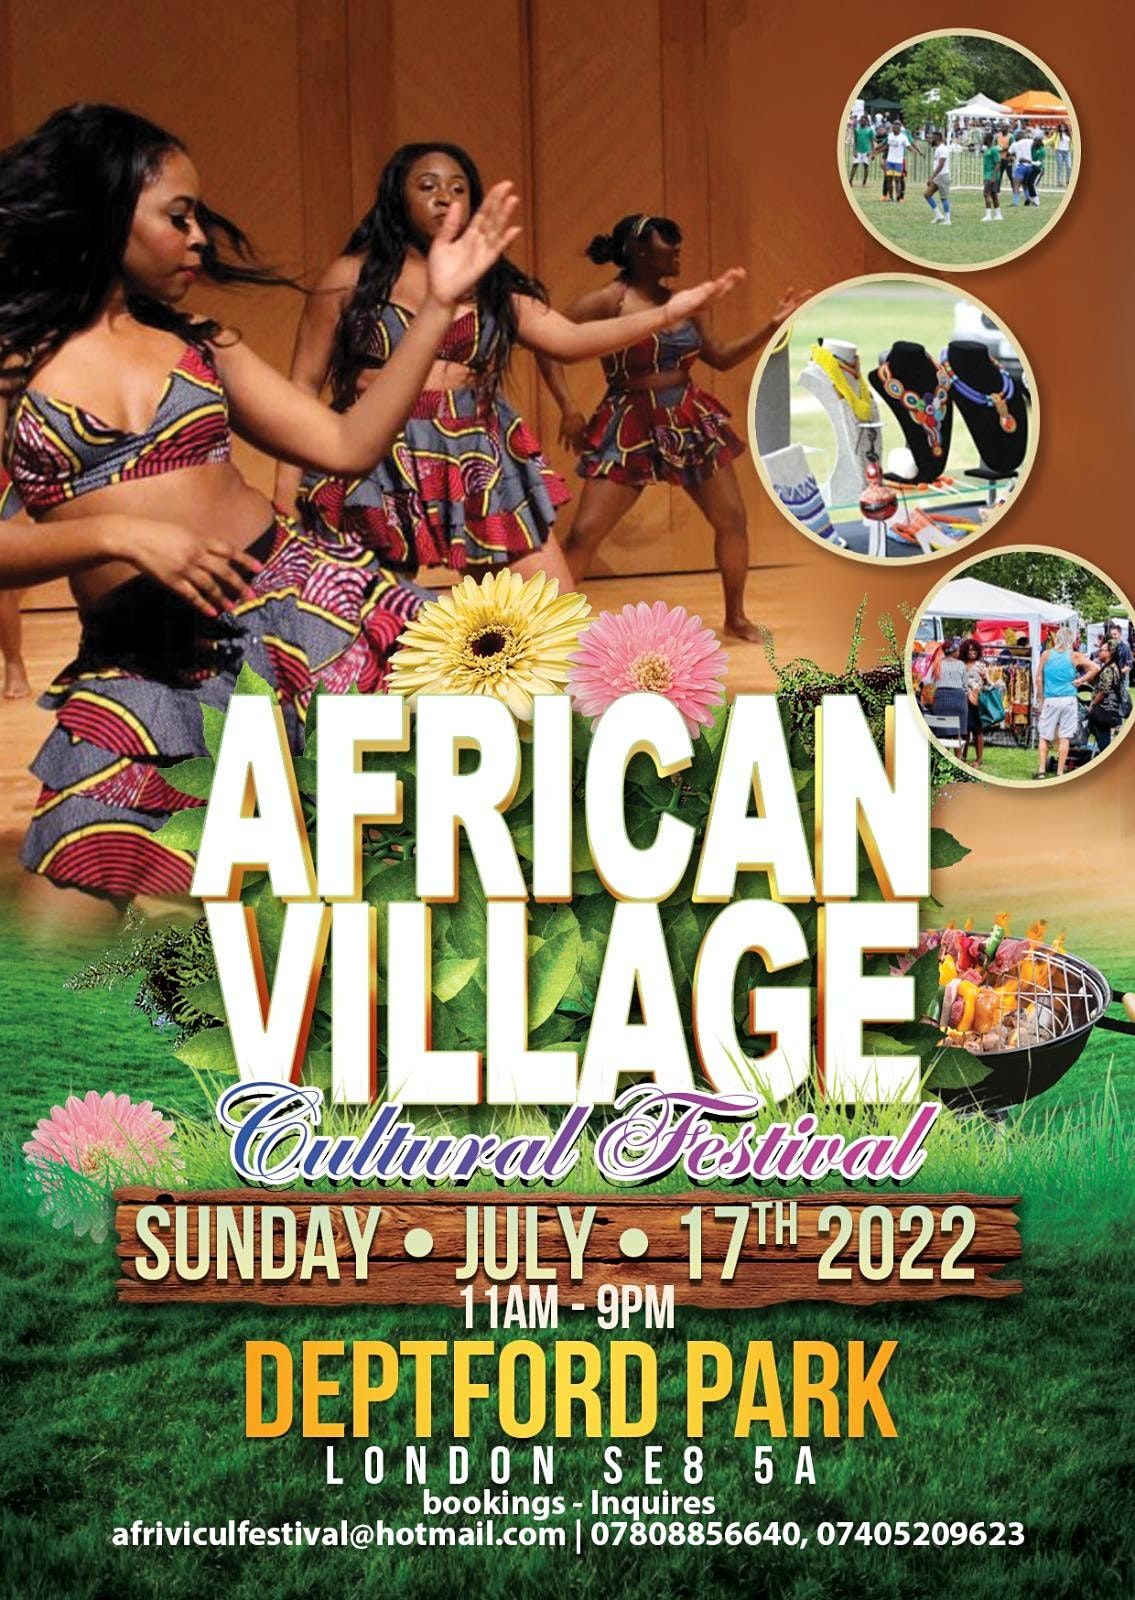 AFRICAN VILLAGE CULTURAL FESTIVAL LONDON 2022